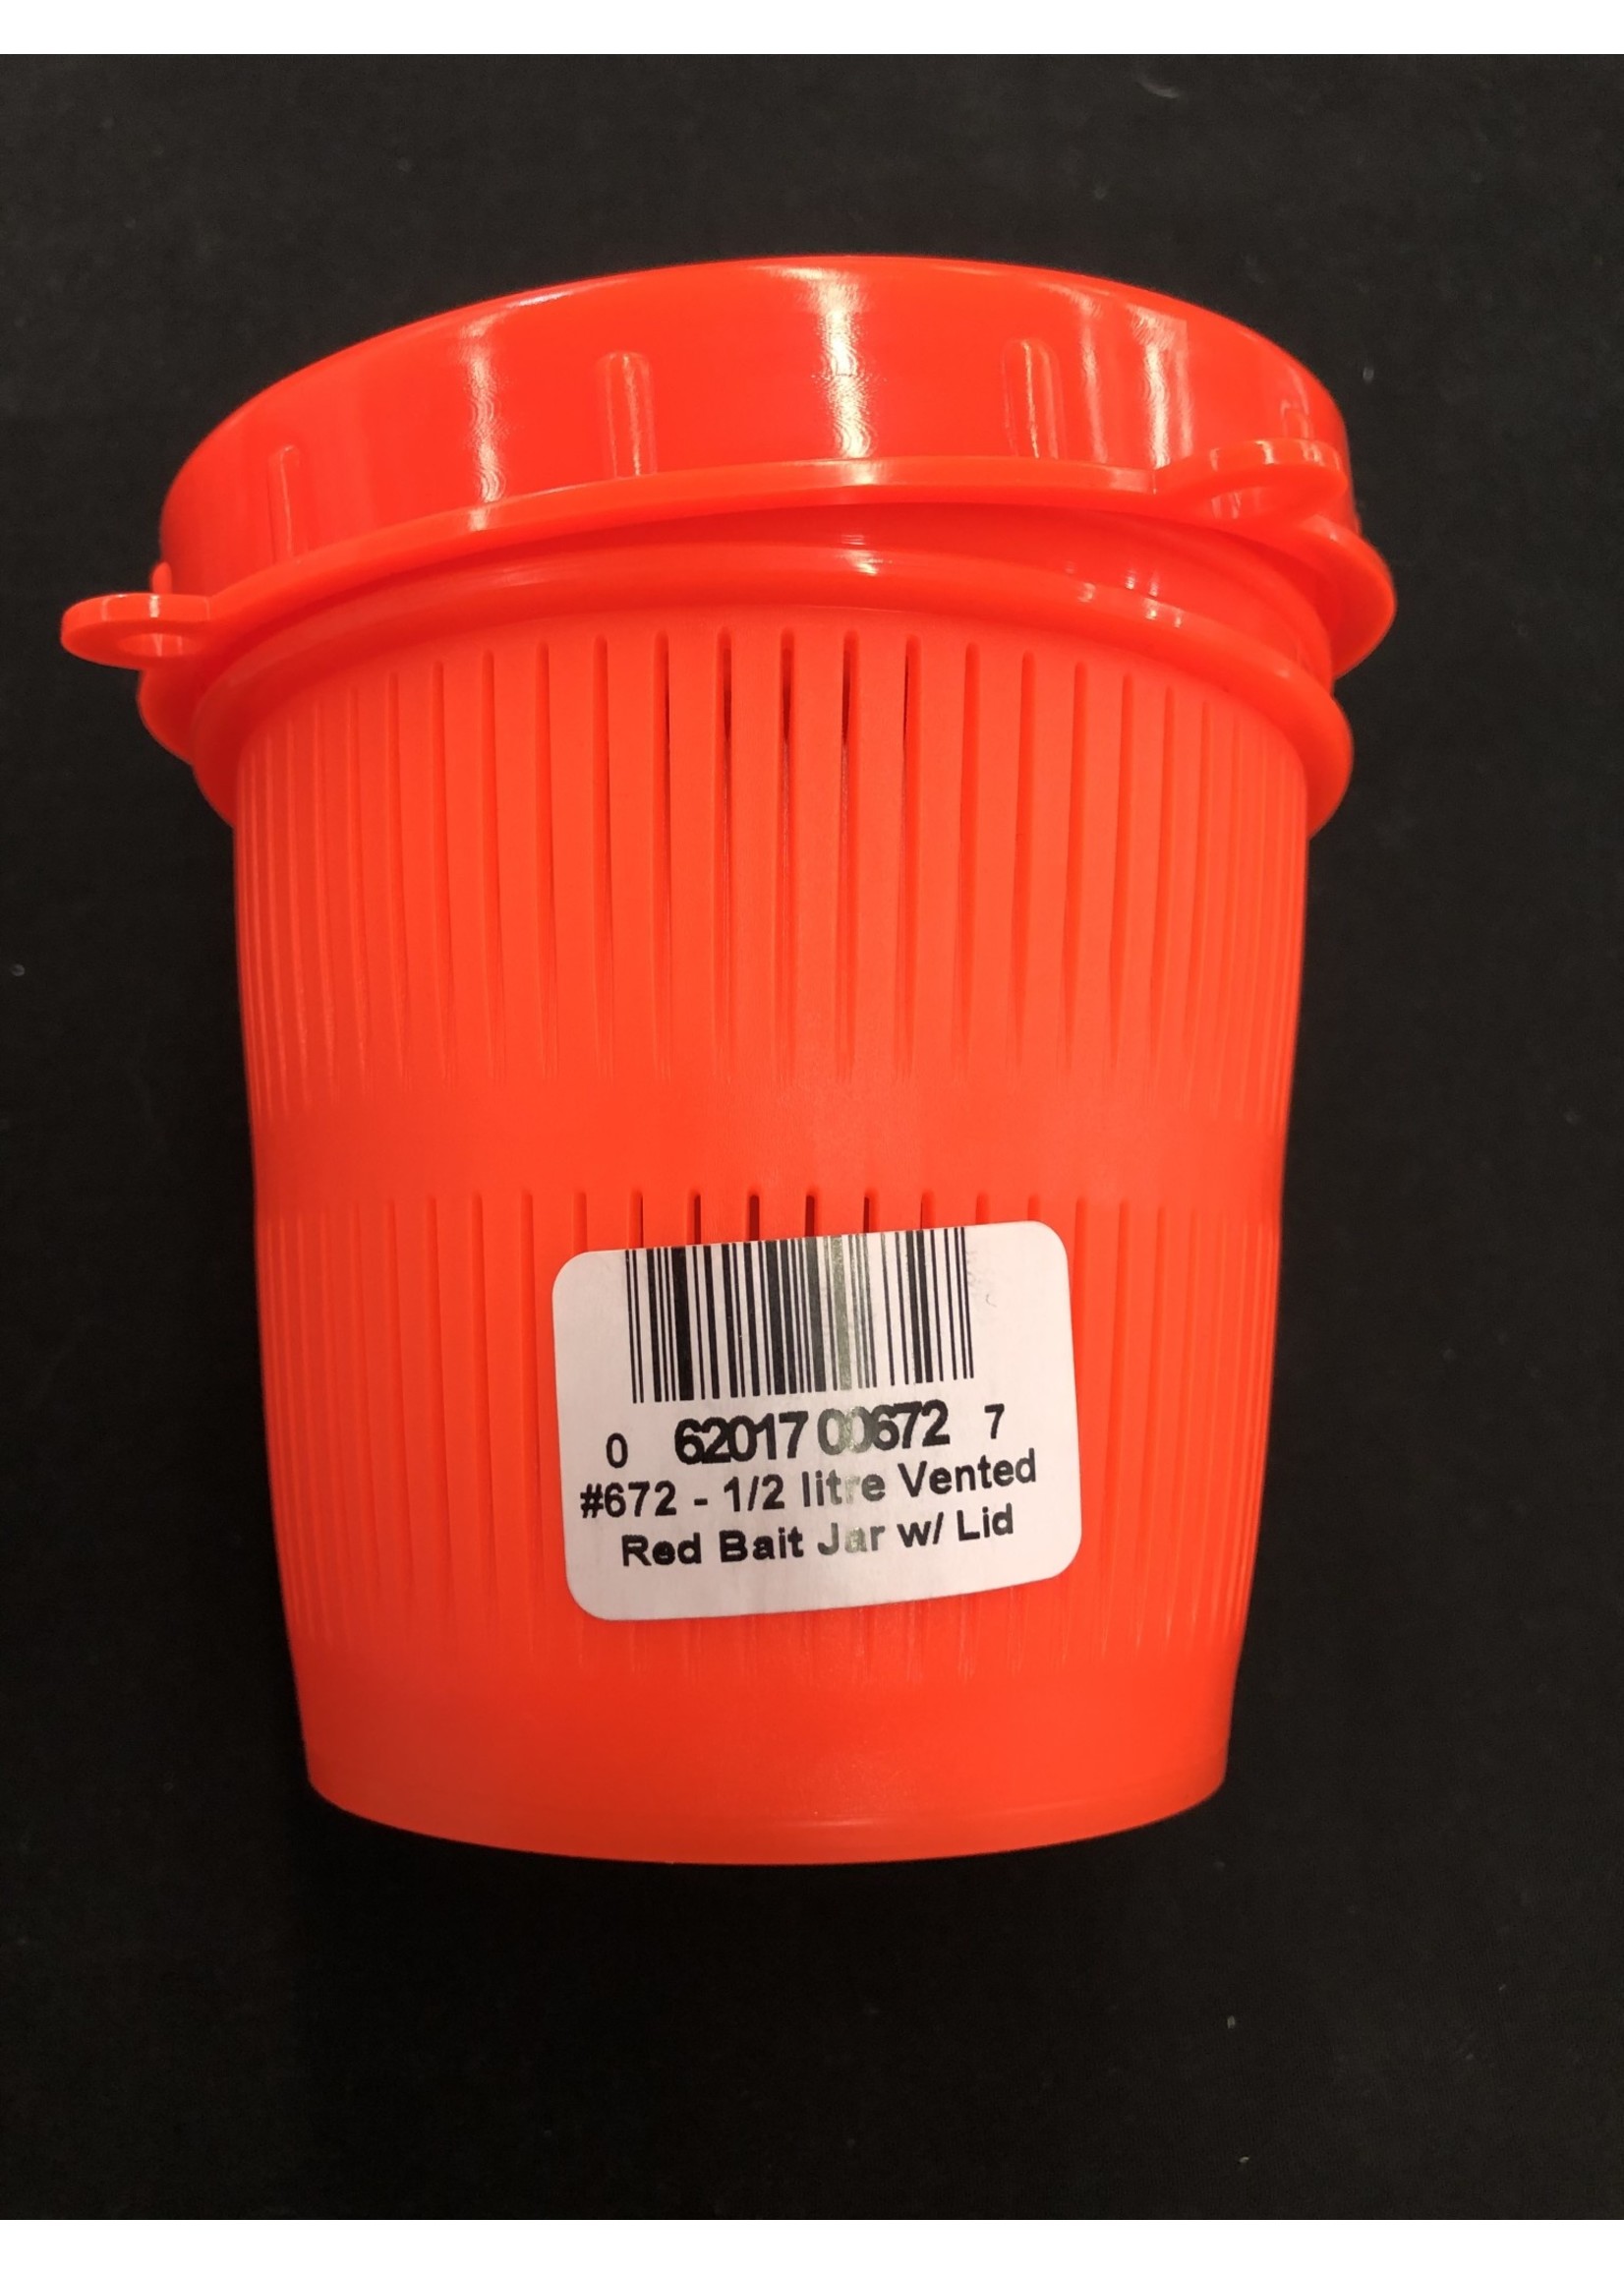 Scotty Scotty Vented Crab Diner Bait Jar c/w Lid 1/2 Litre Flourescent Red 0672